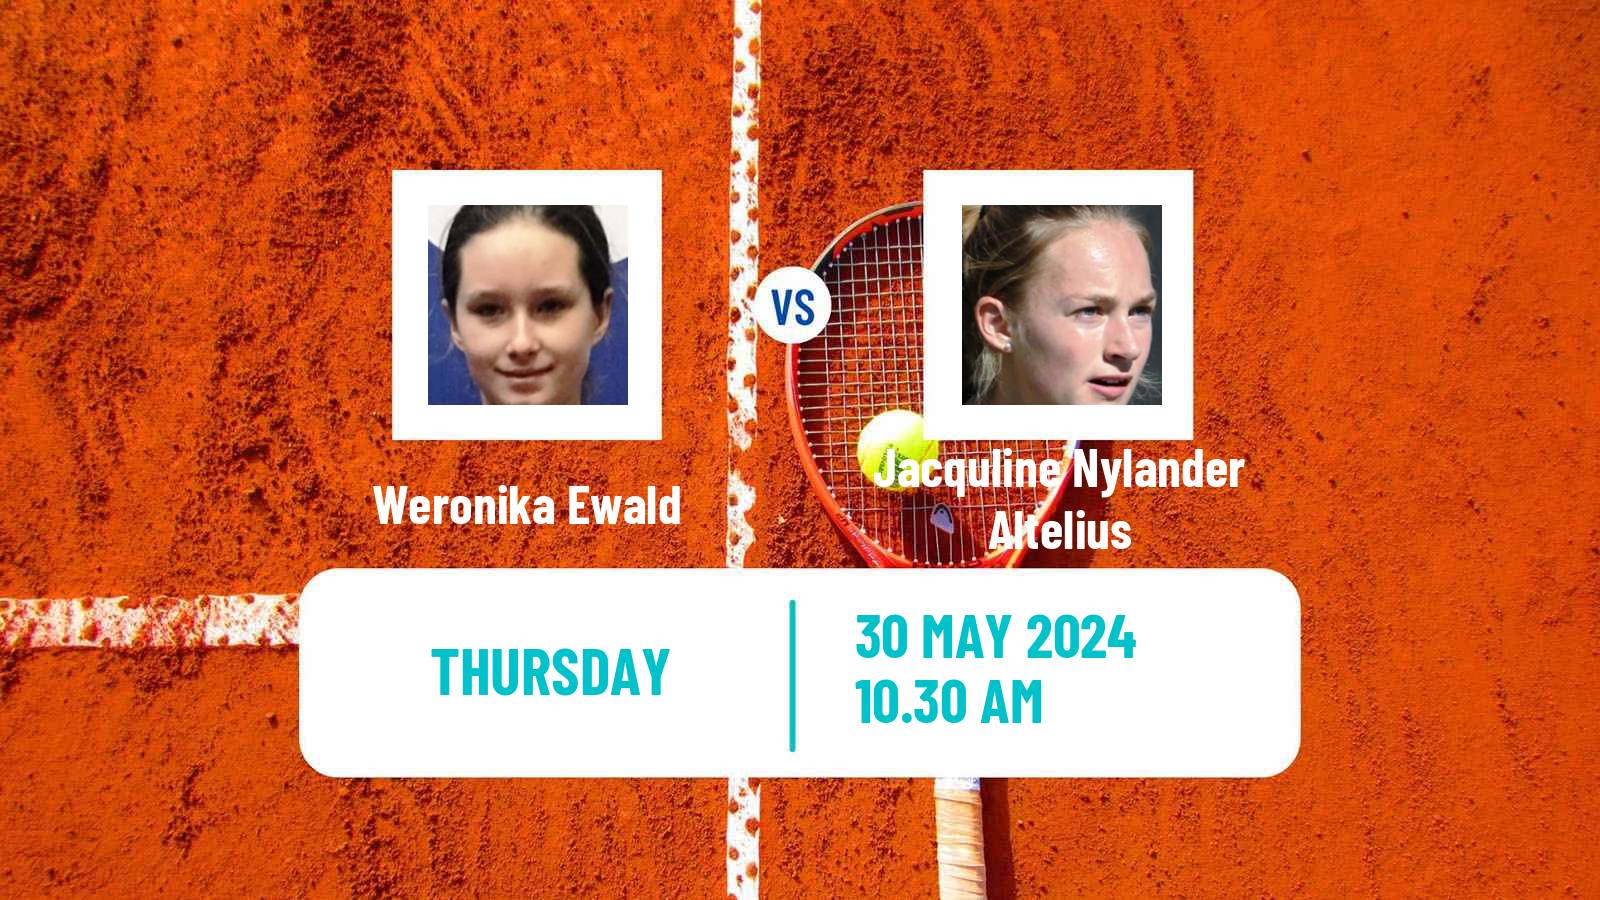 Tennis ITF W15 Bol 2 Women Weronika Ewald - Jacquline Nylander Altelius